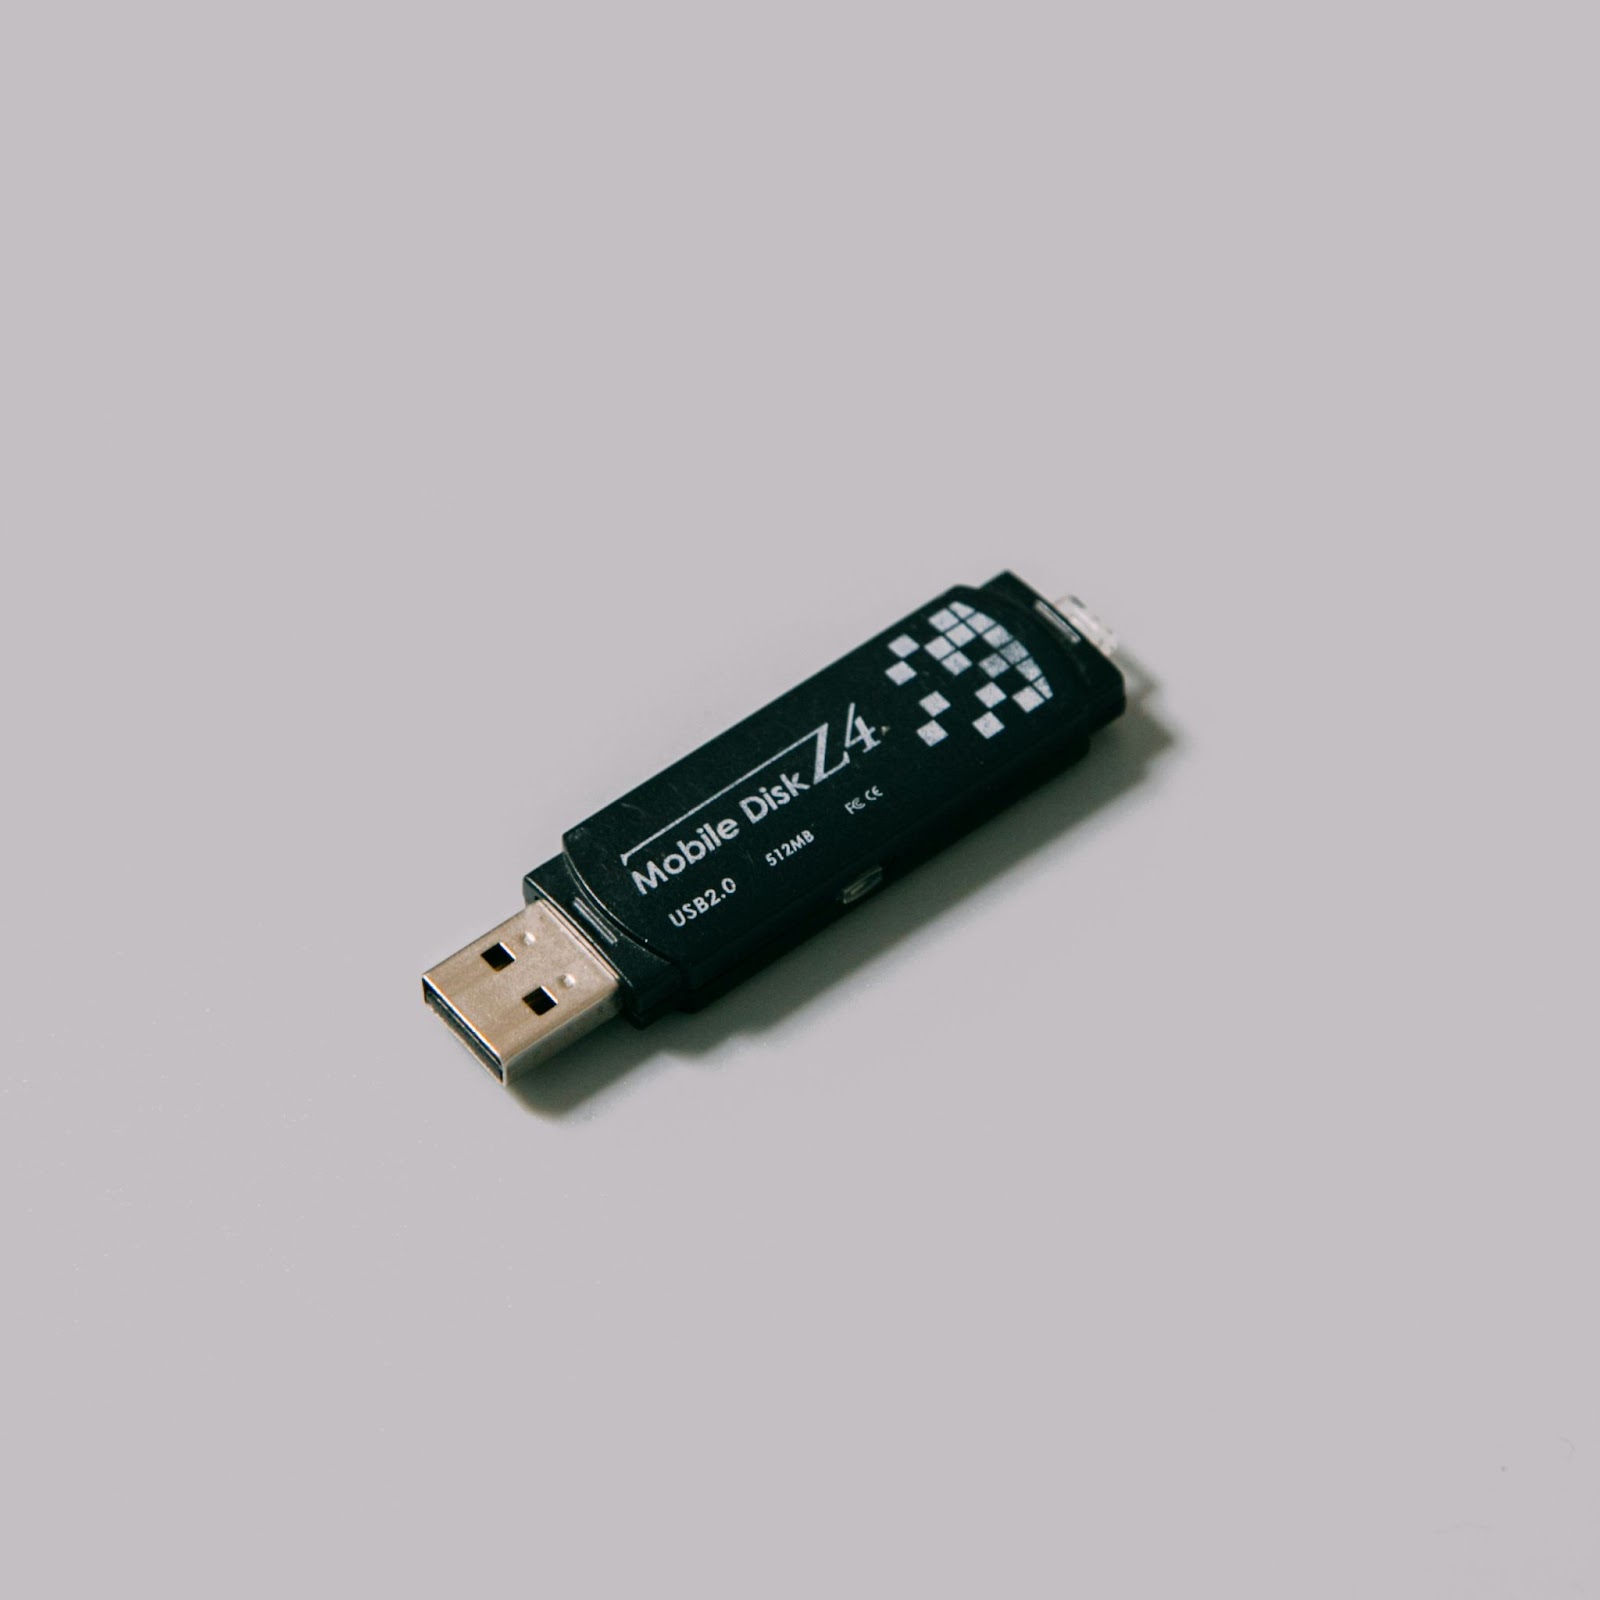  Flash Drive or USB